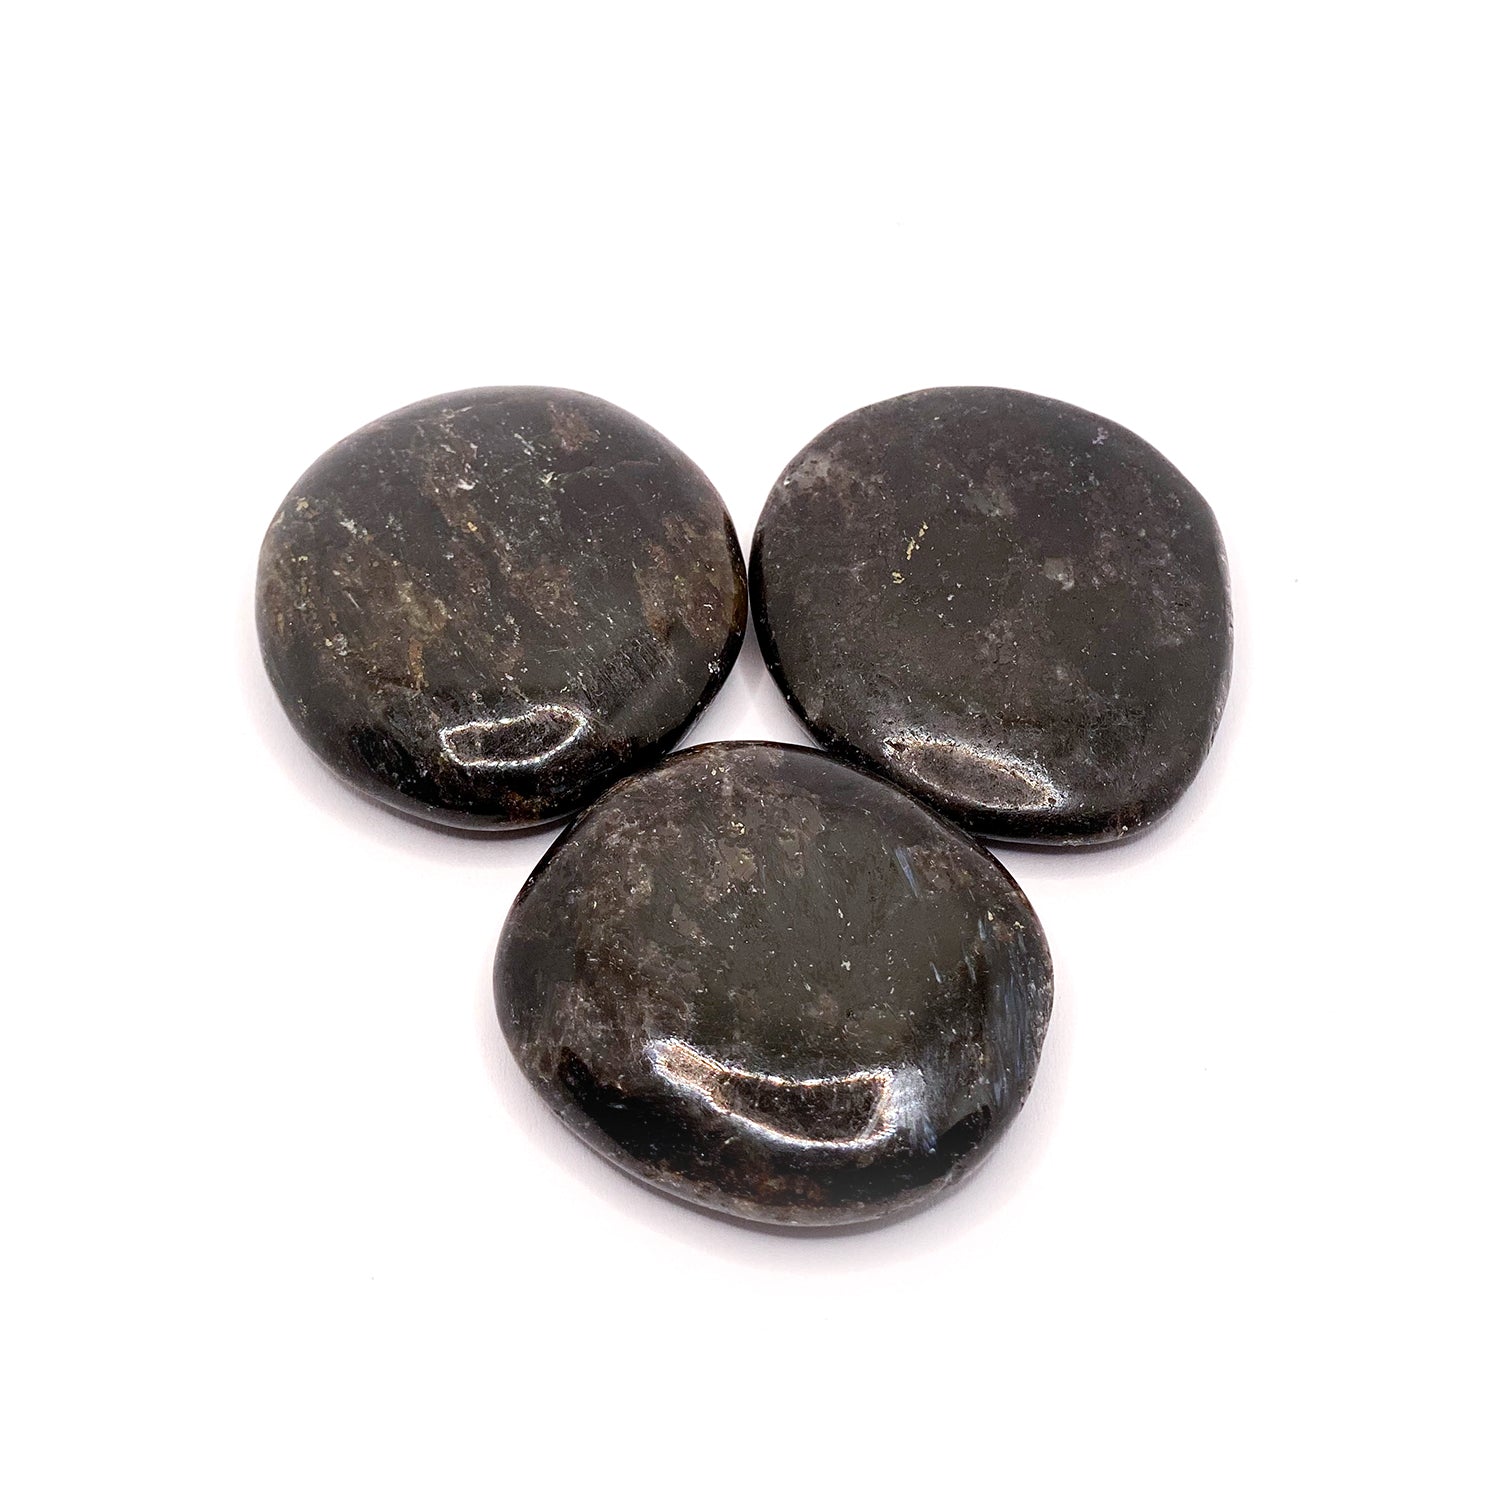 Akmens Antofilīts / Antophyllite Chakra Stone 35-40mm